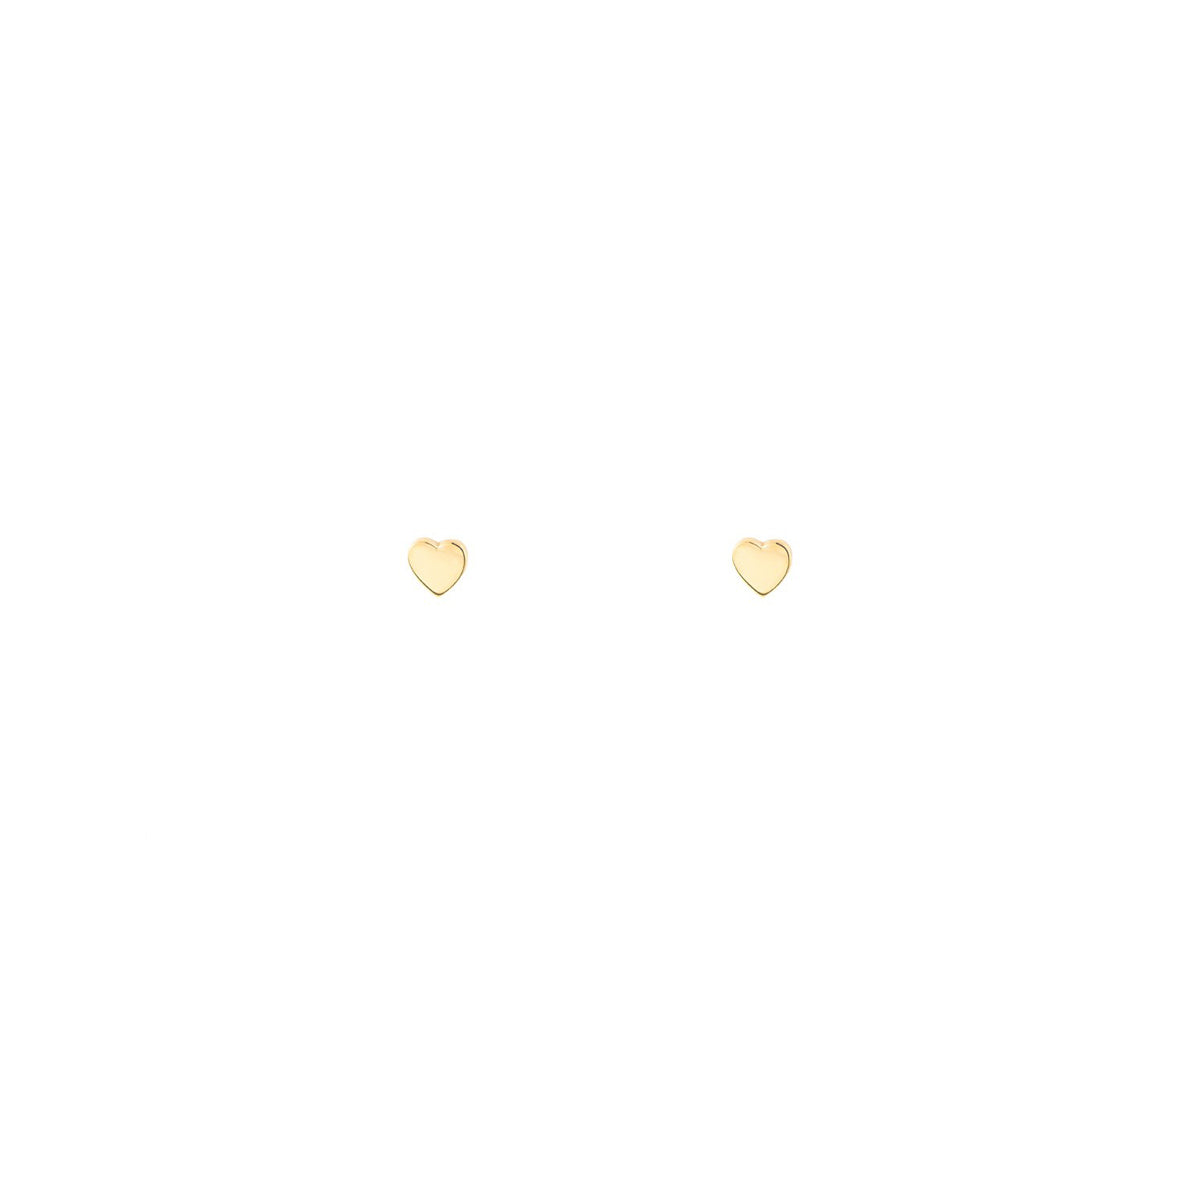 tiny gold heart stud earrings PRE 429 14KY